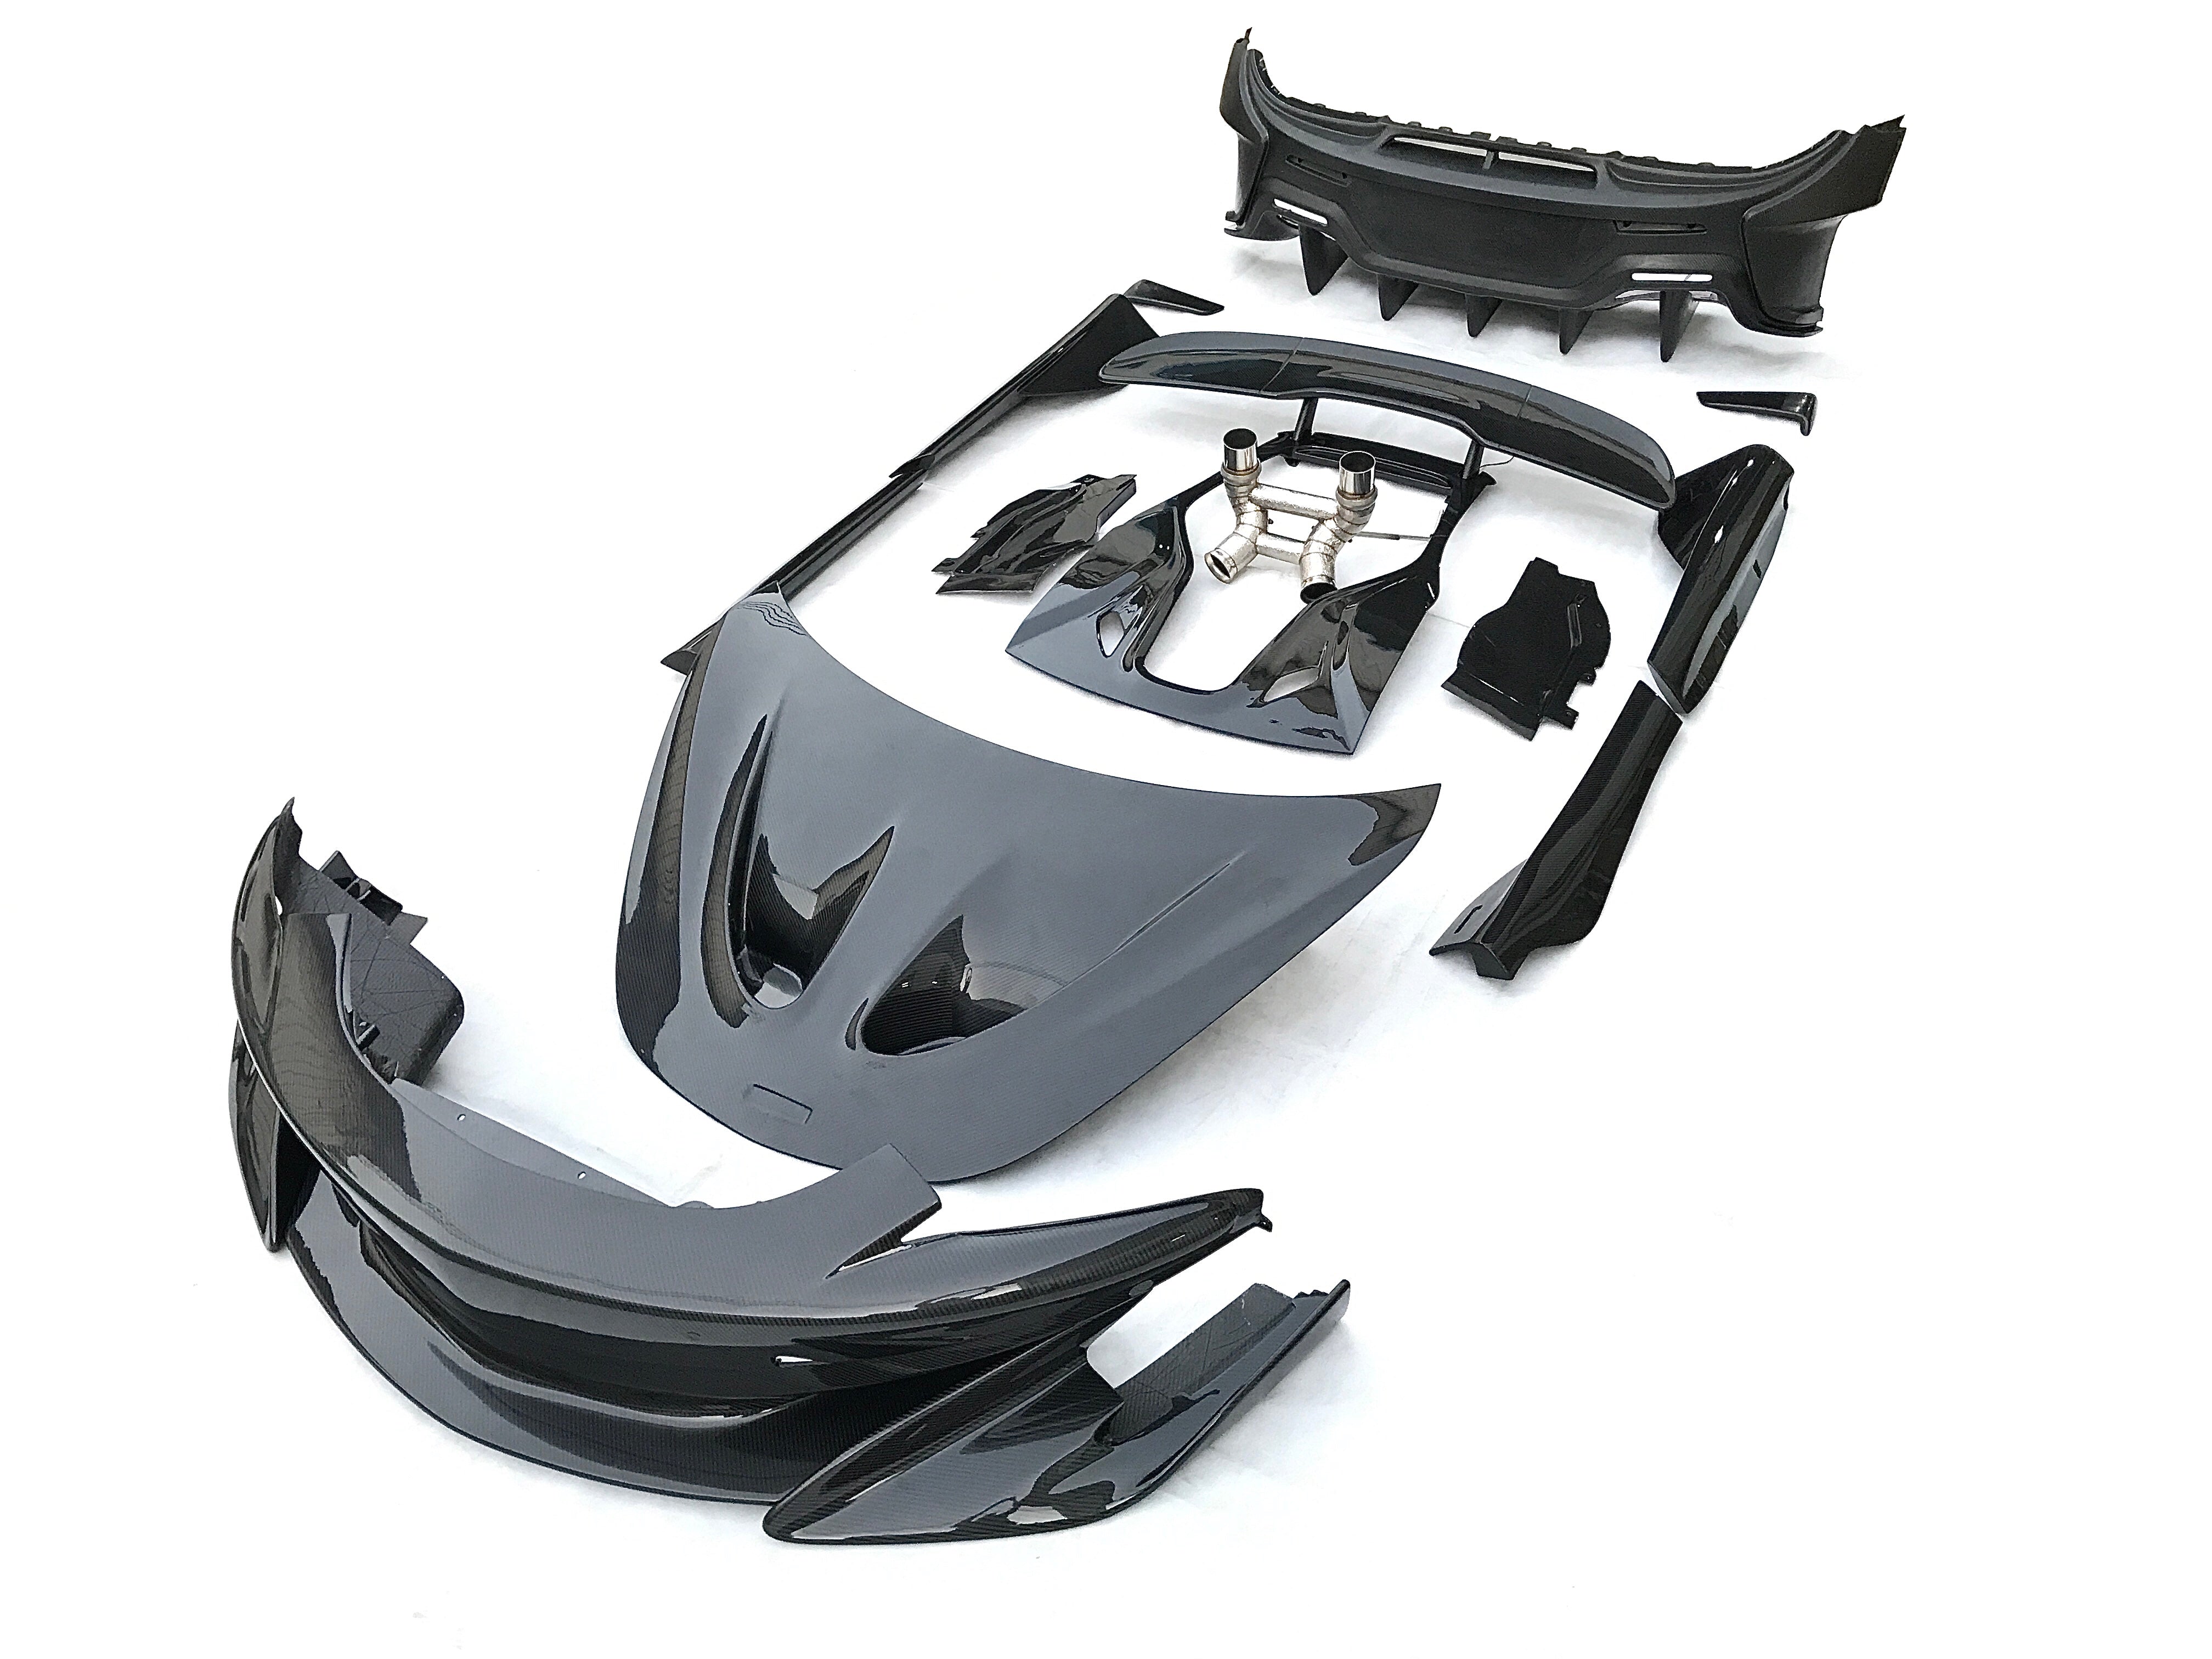 600LT Carbon Fiber Body Kit - McLaren 540C / 570S / 570GT